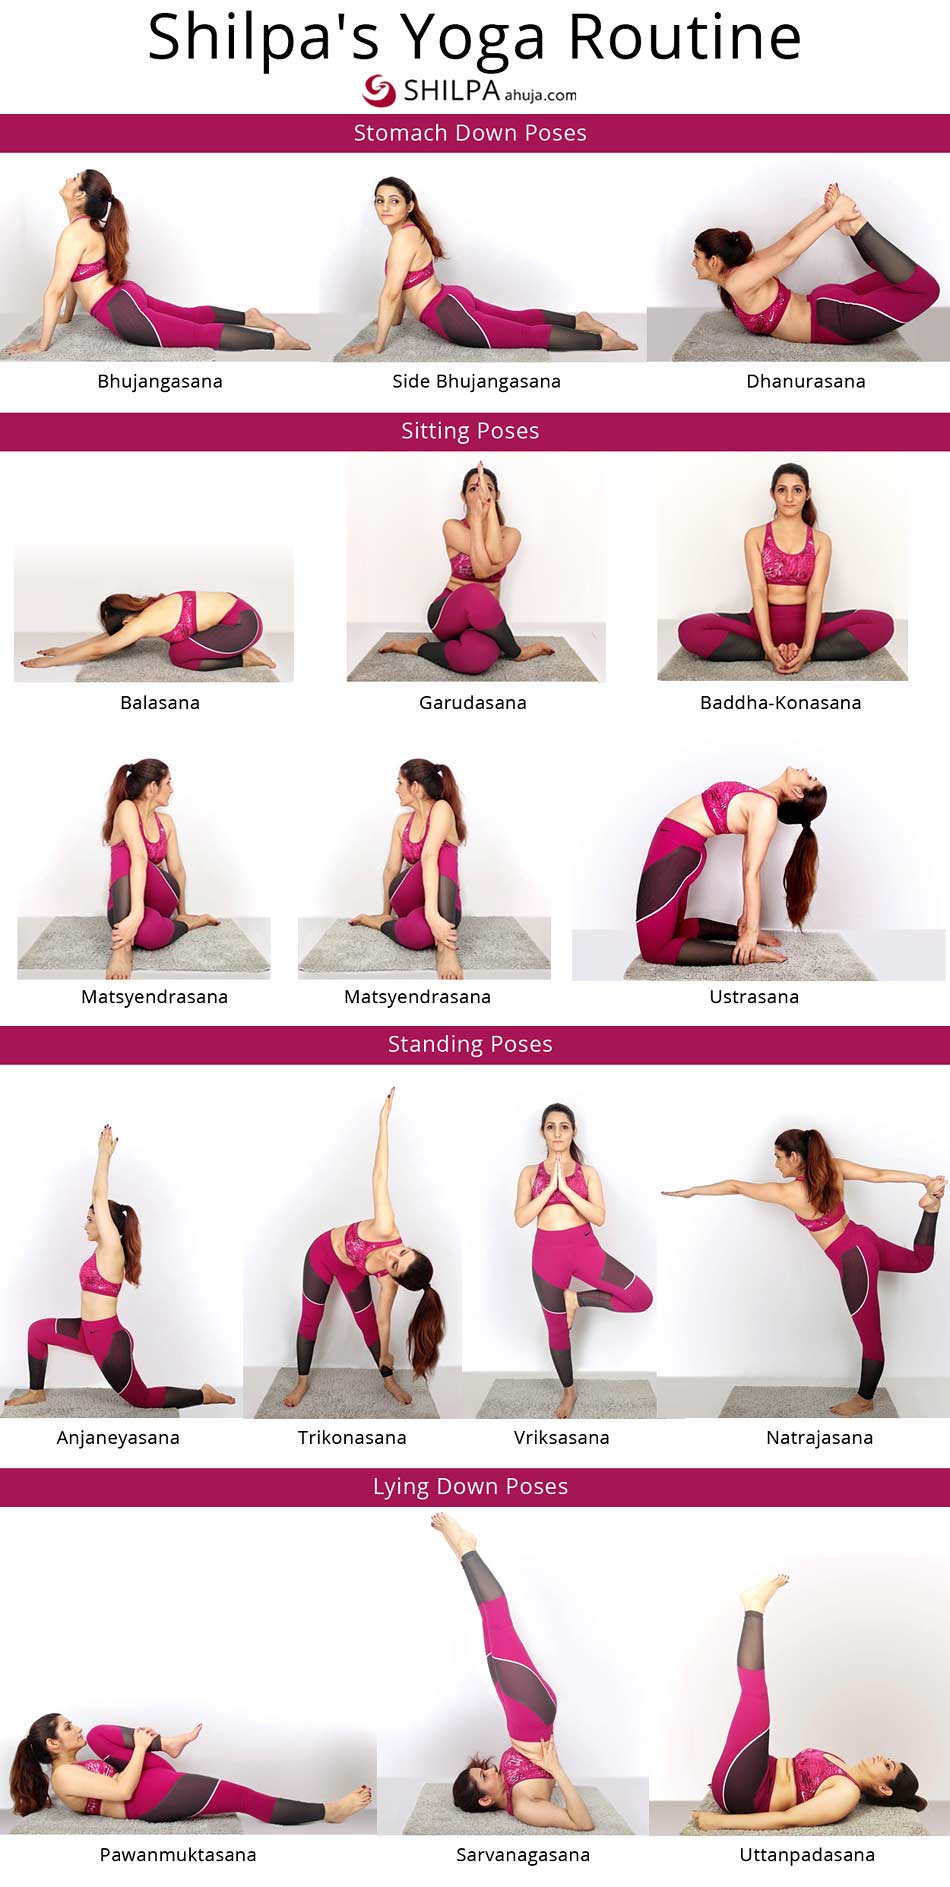 Yoga Poses that Improve Flexibility | Tempo